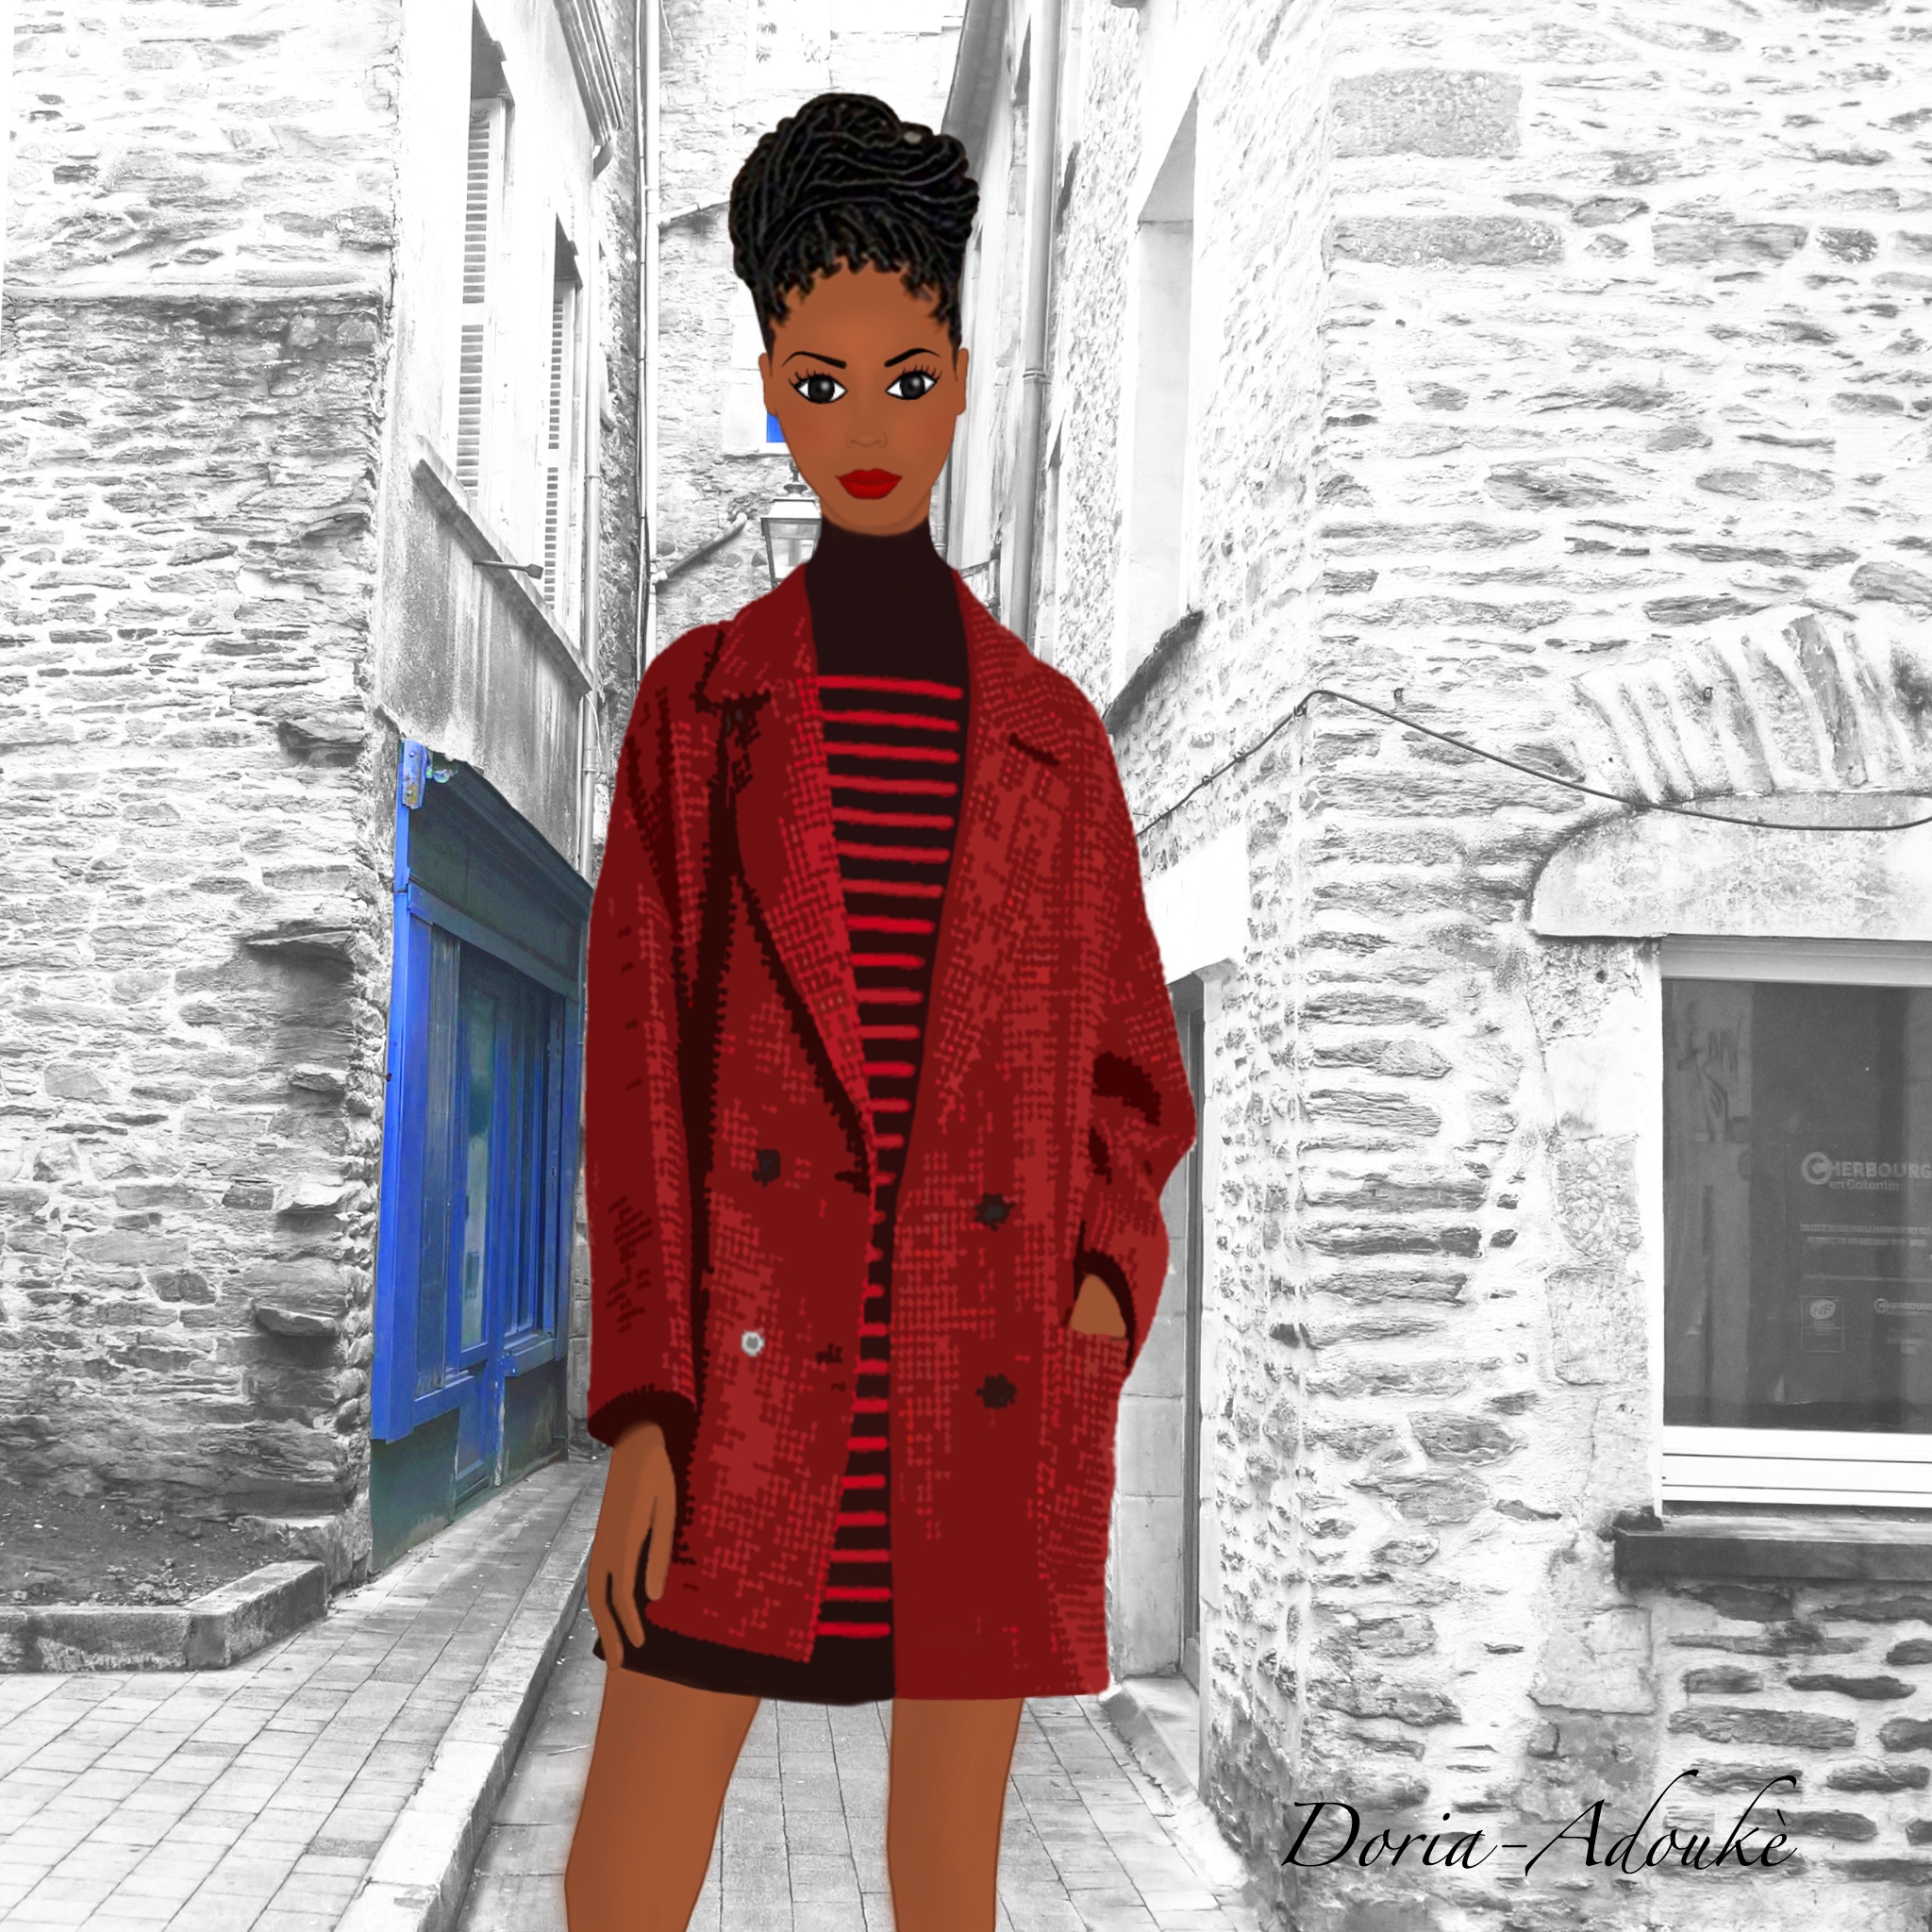 black girl in cherbourg illustration